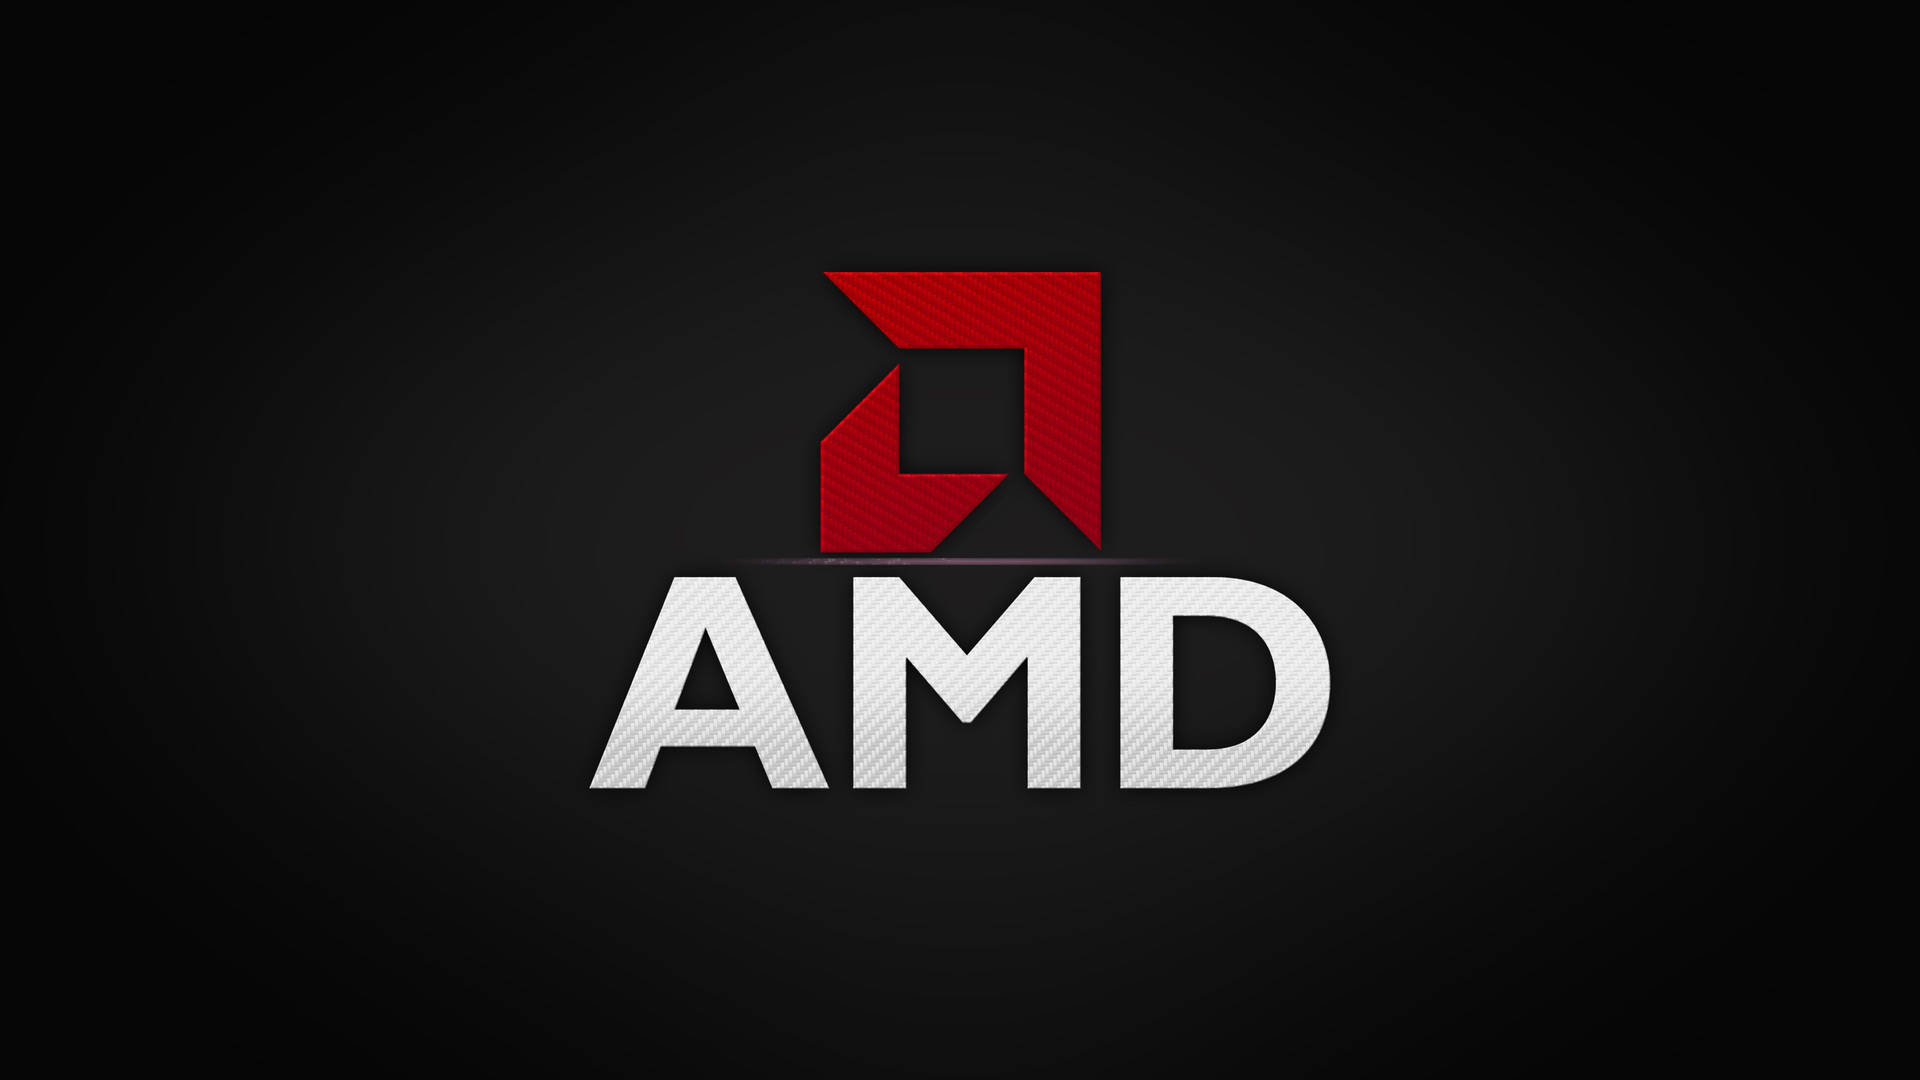 Amd Logo Metallic Texture